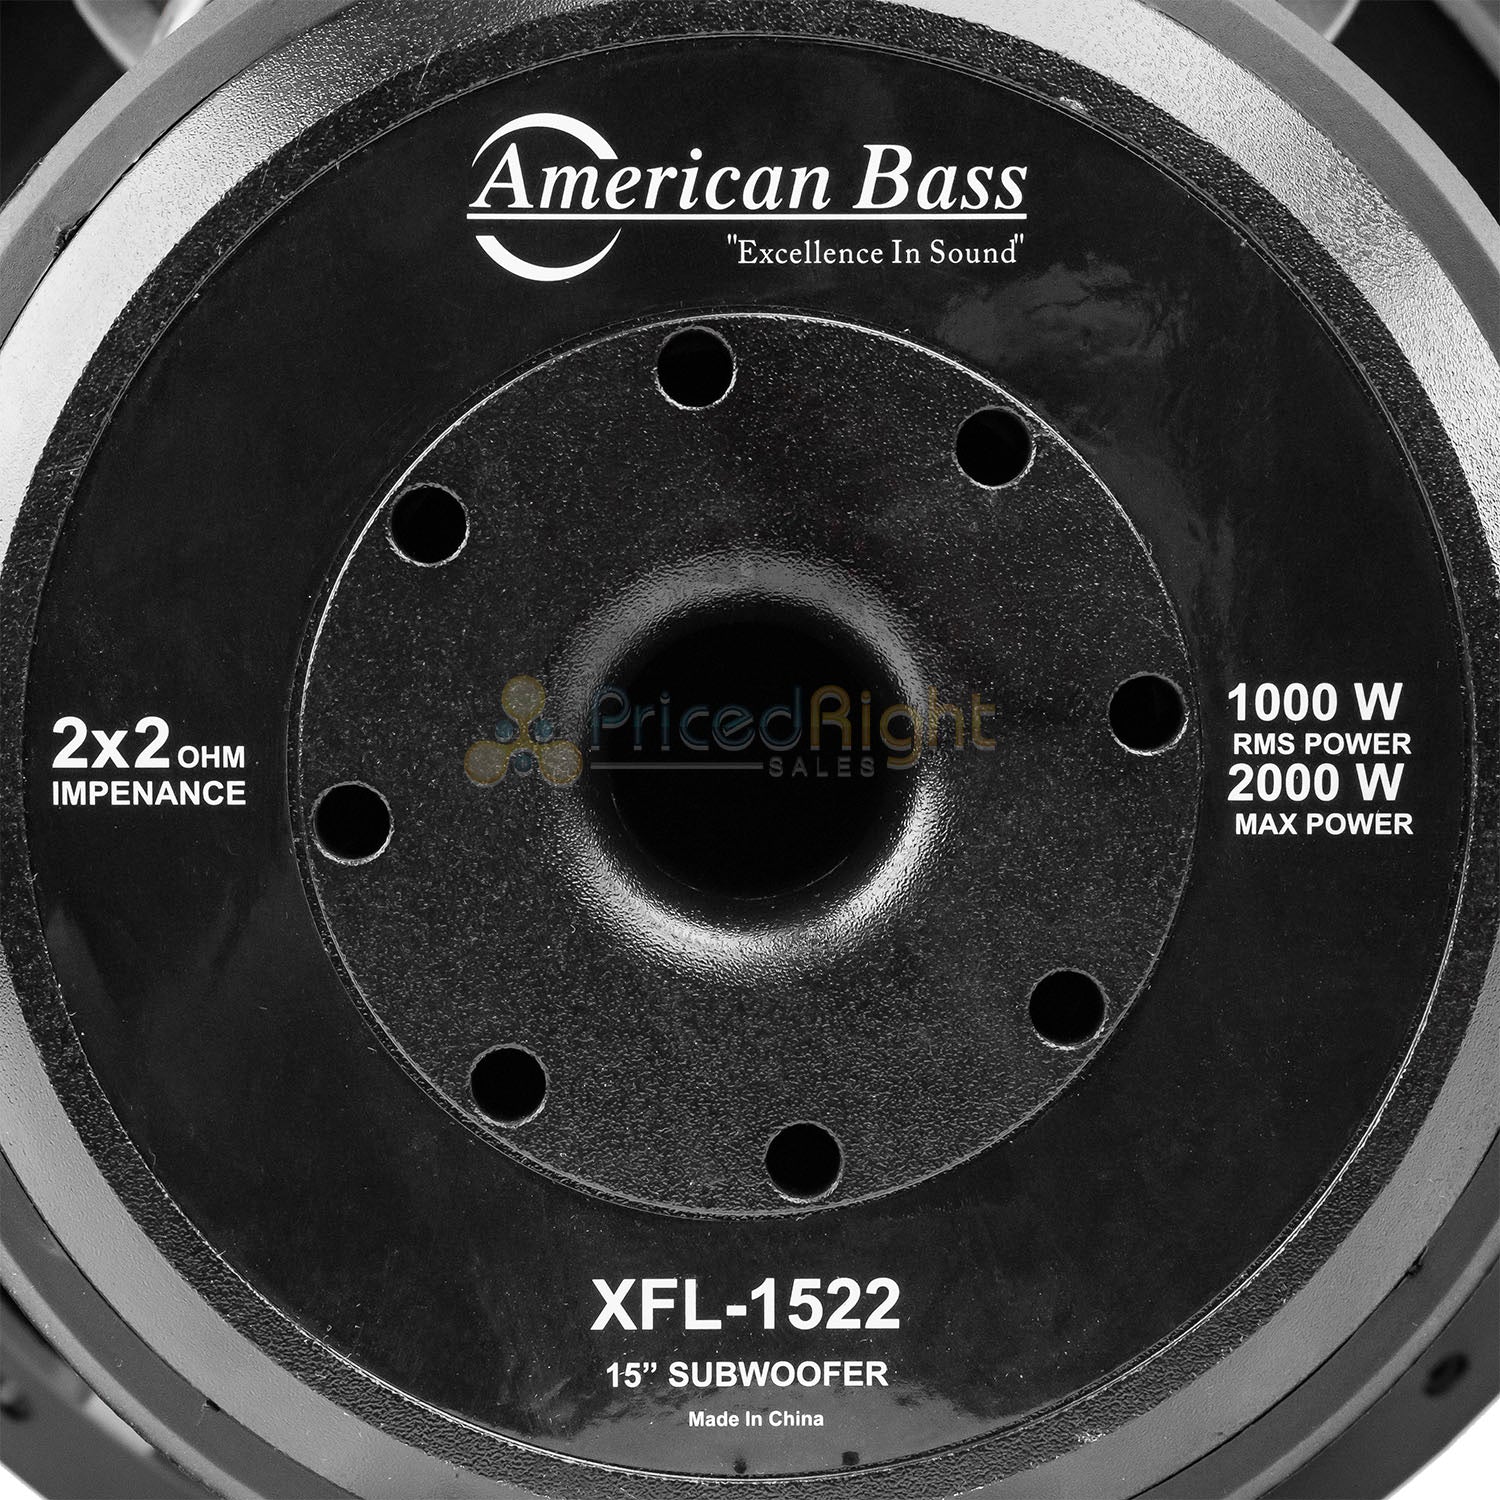 American Bass XFL-1522 15" Subwoofer Dual 2 Ohm 2000 Watts Max Car Audio Single